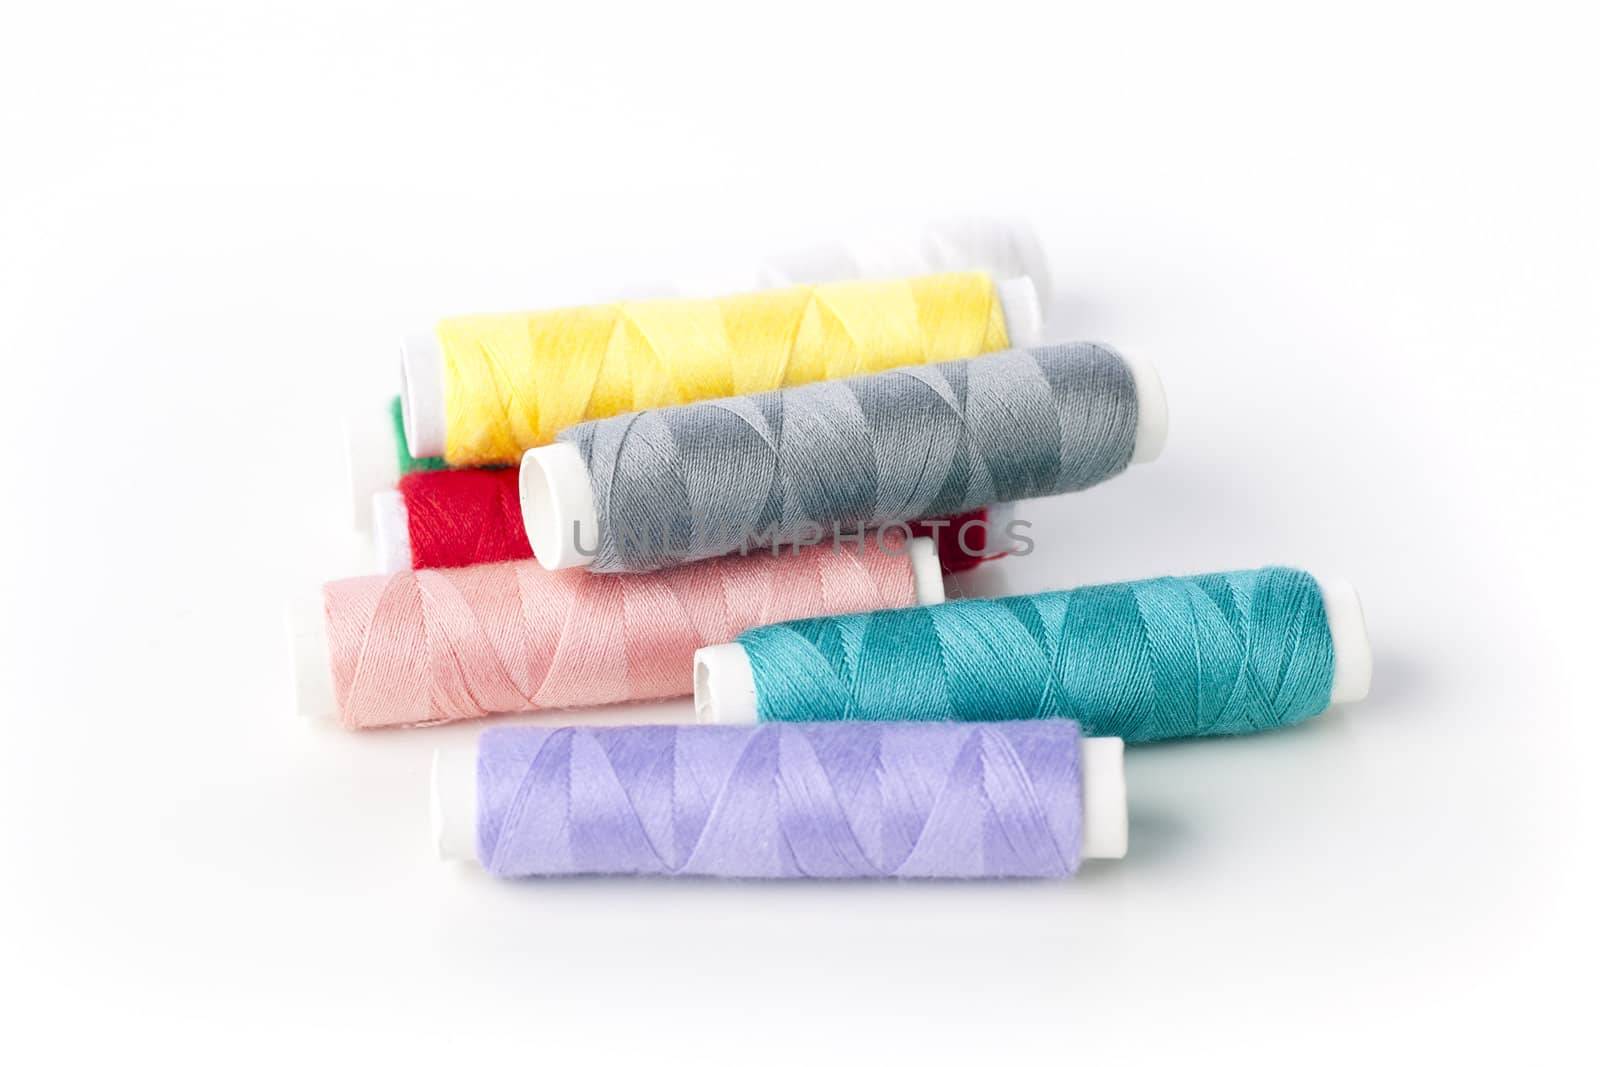 Colorful Thread Spools by charlotteLake